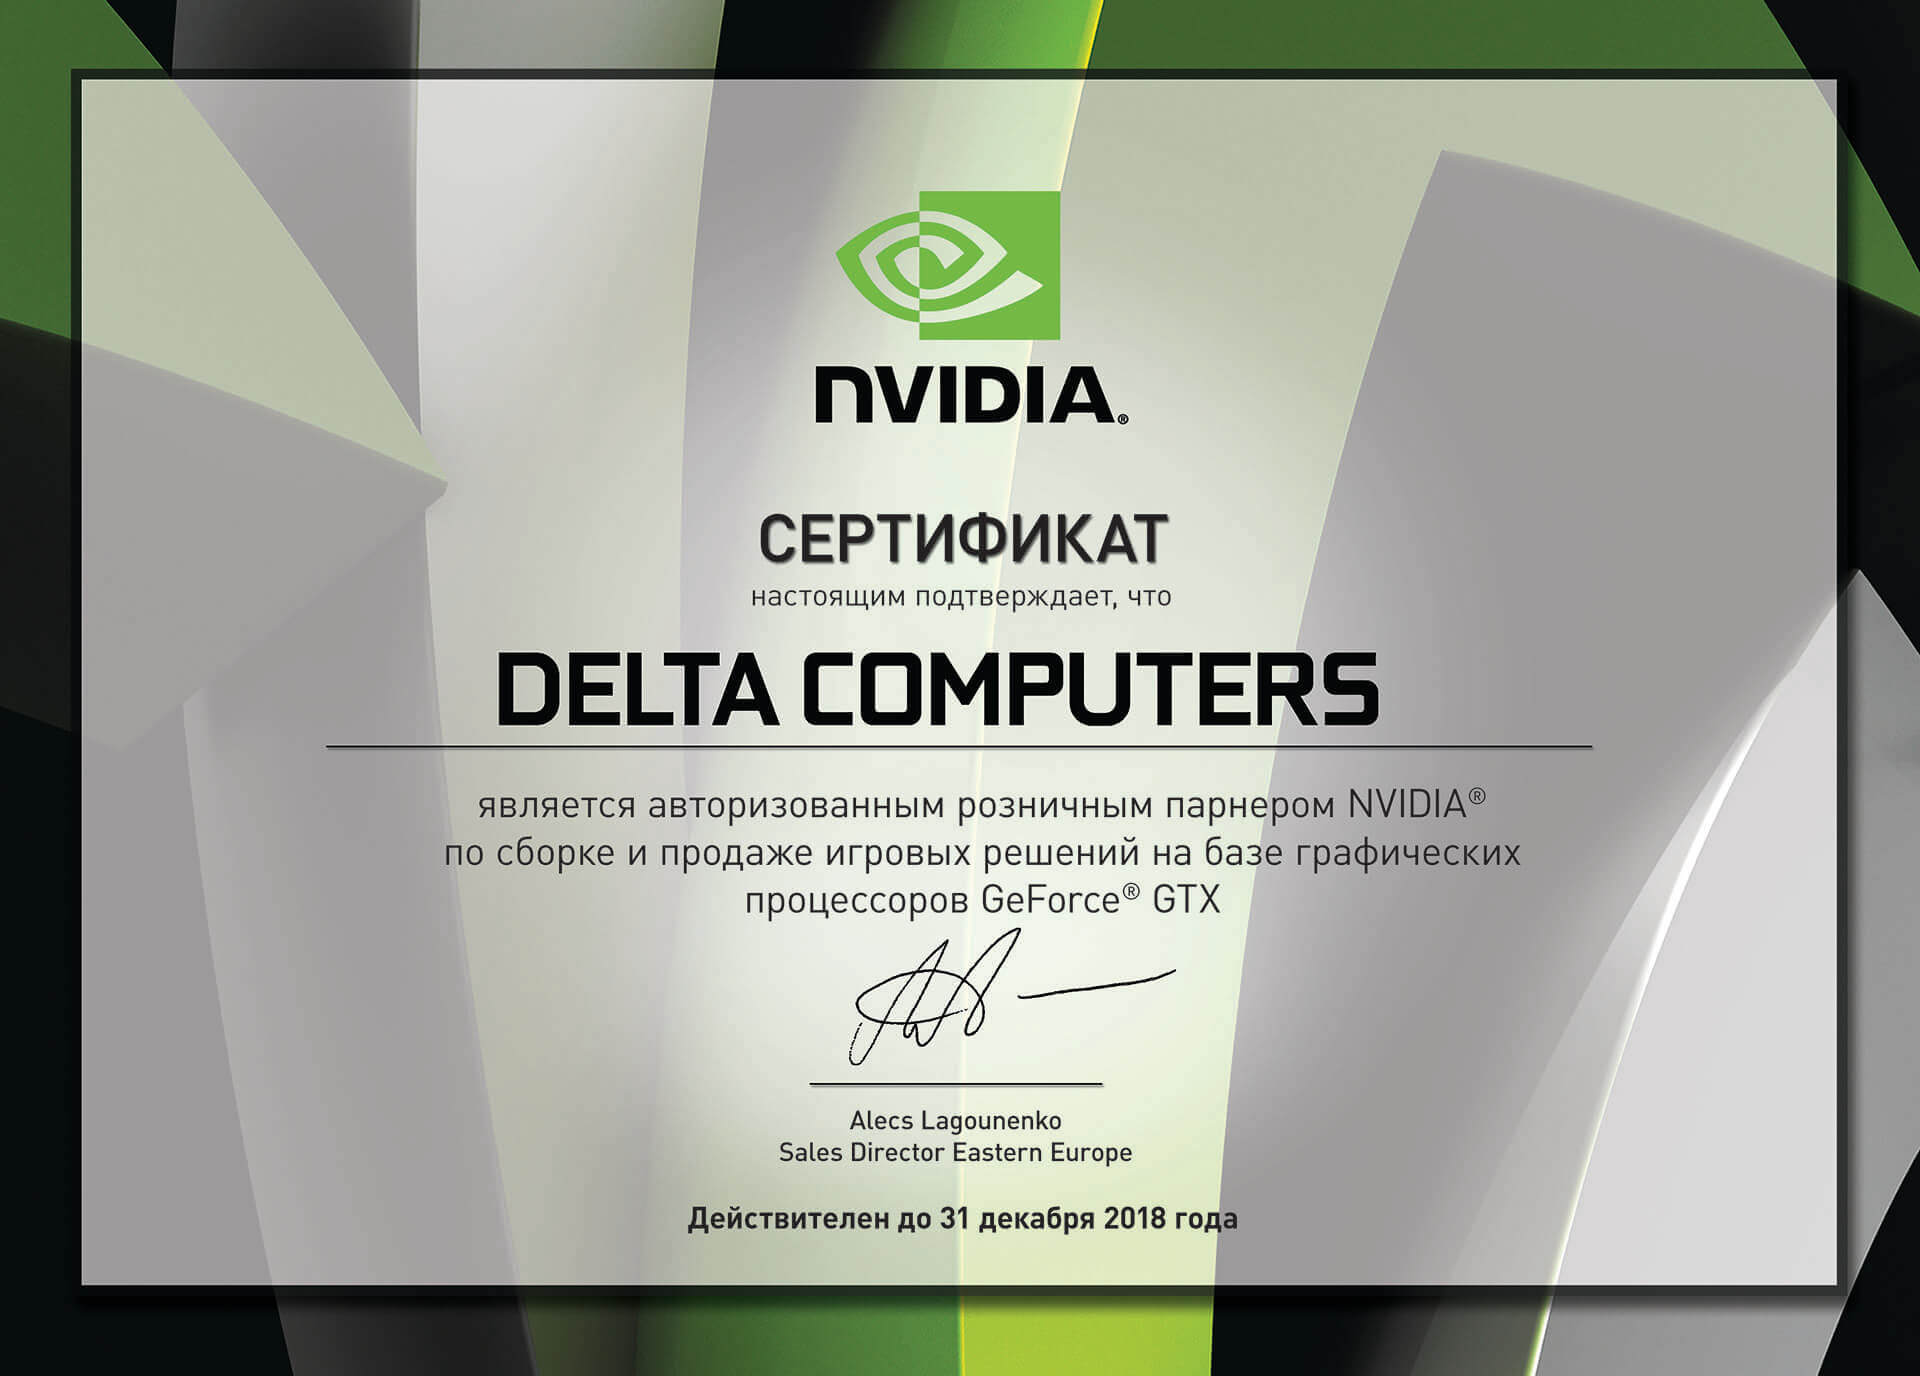 NVIDIA Certificate 2018 DELTA COMPUTERS